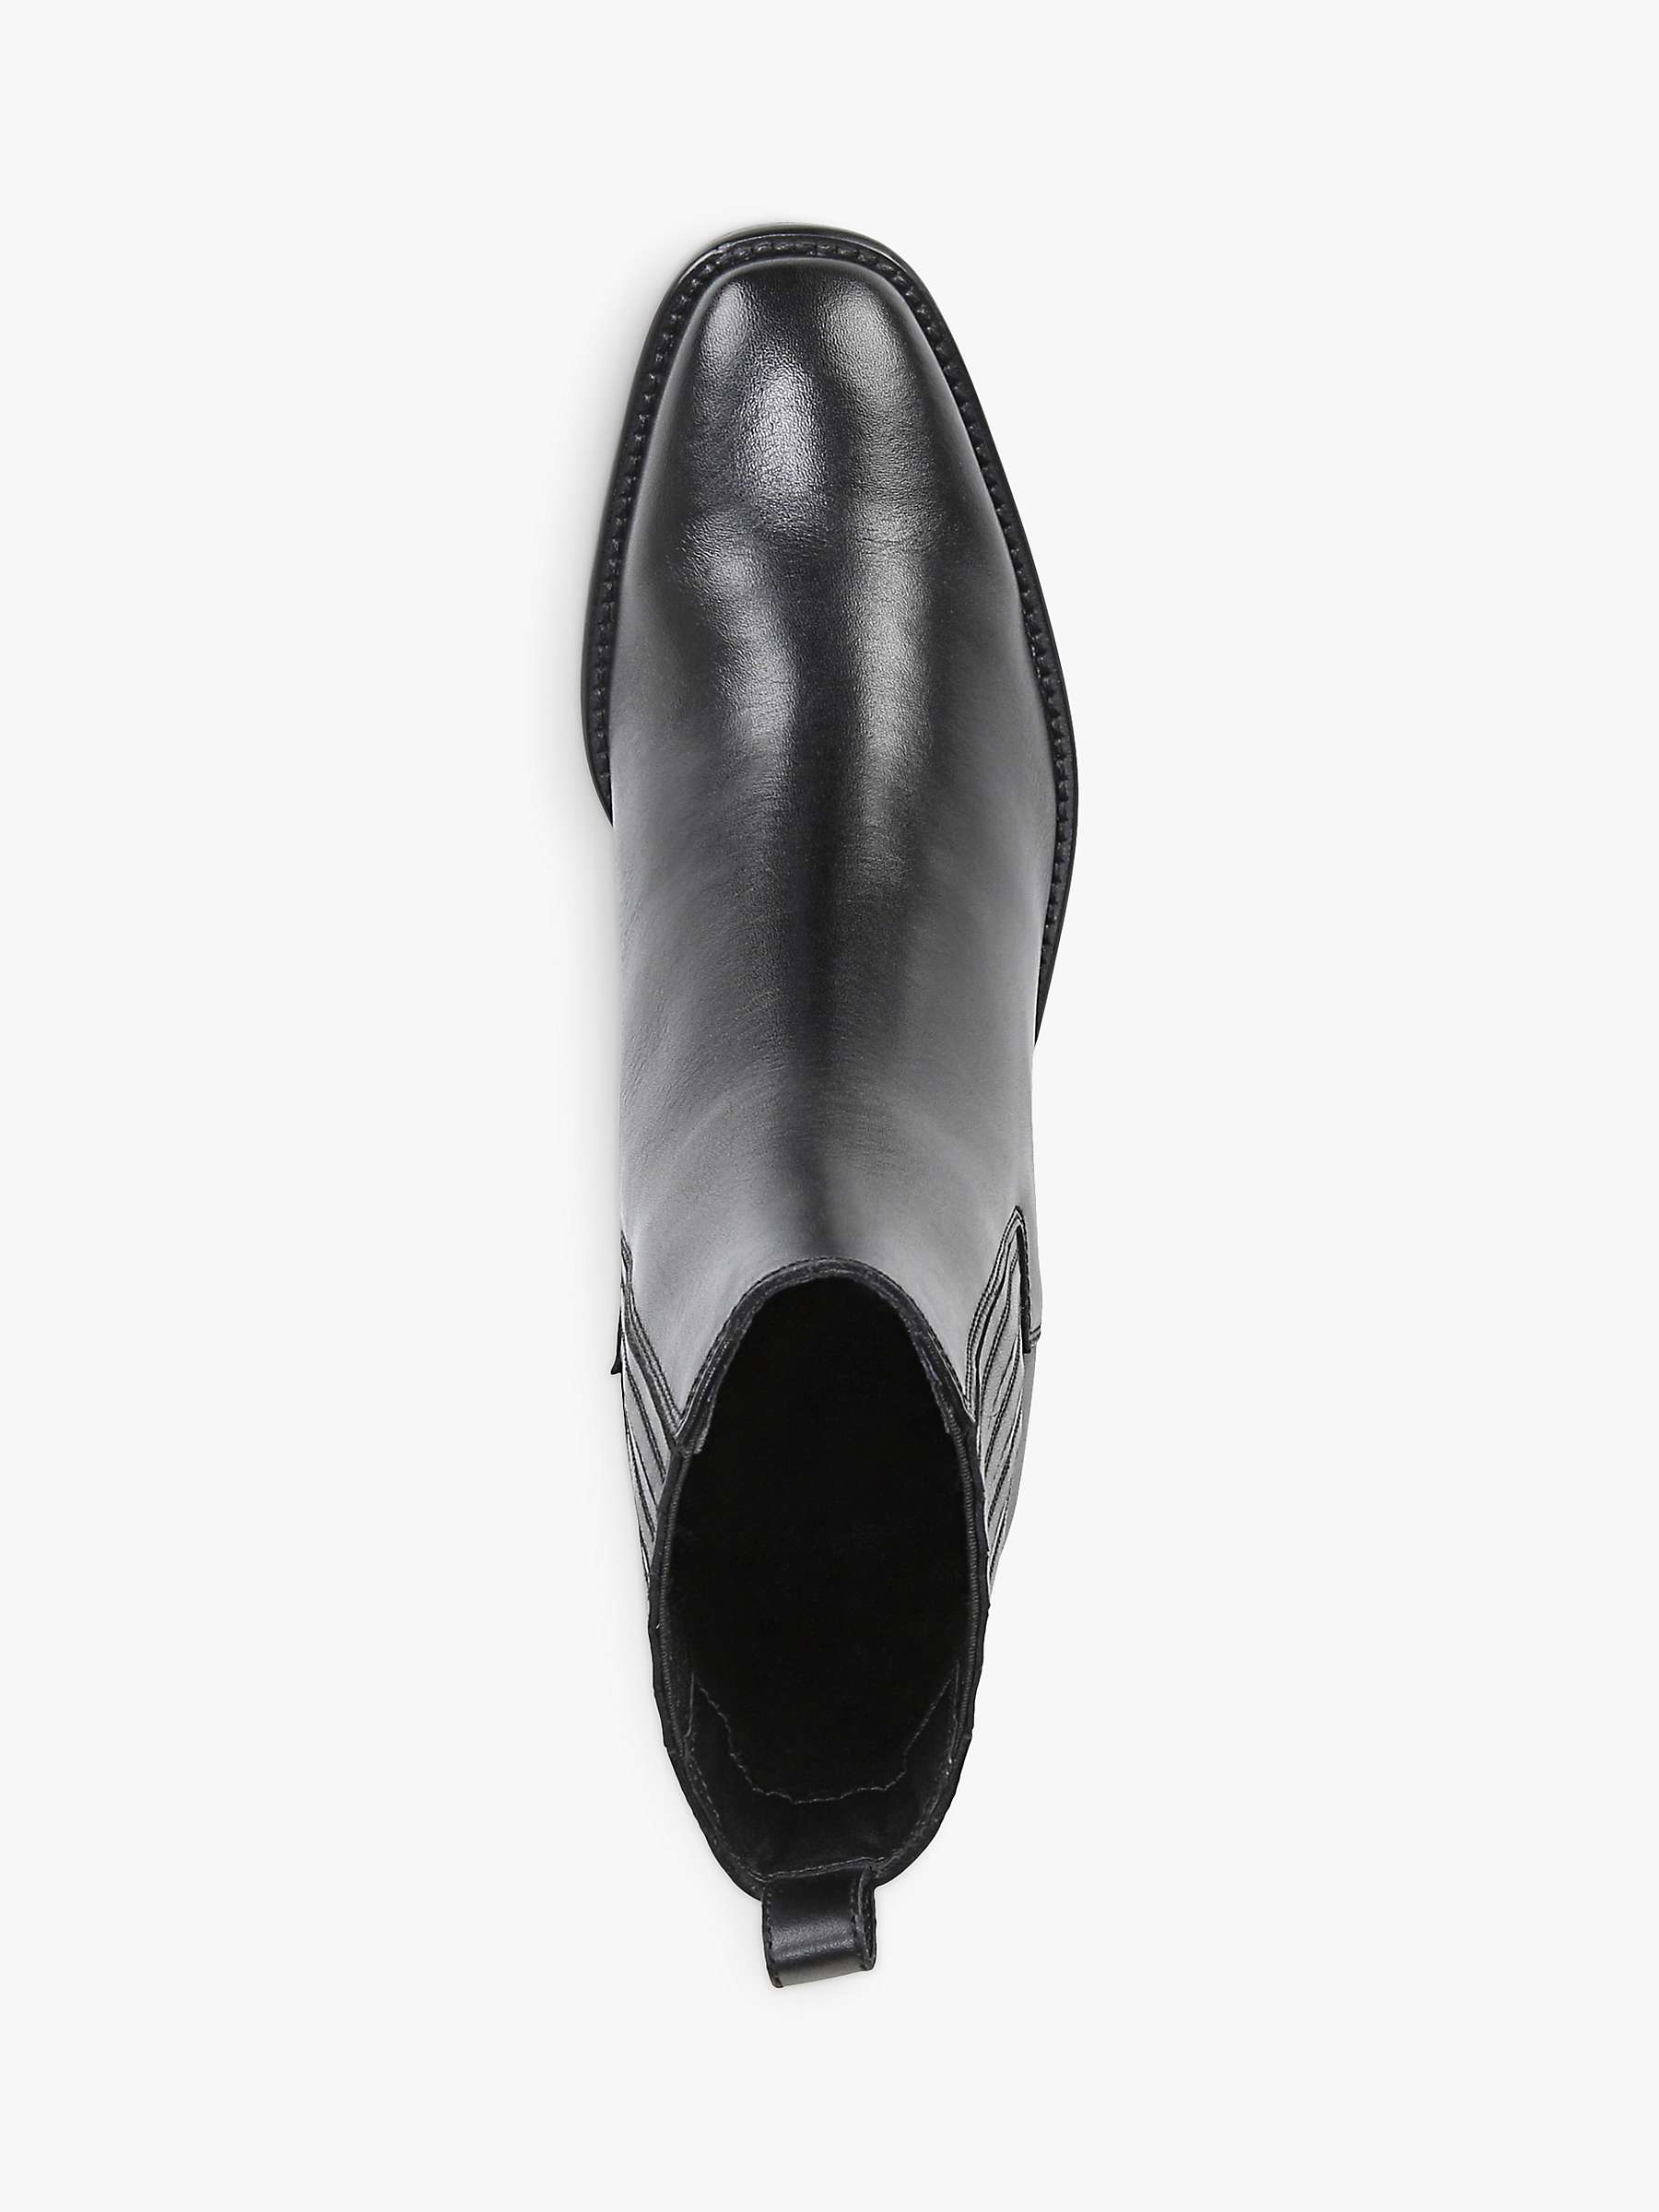 Sam Edelman Bronson Ankle Boots, Black at John Lewis & Partners